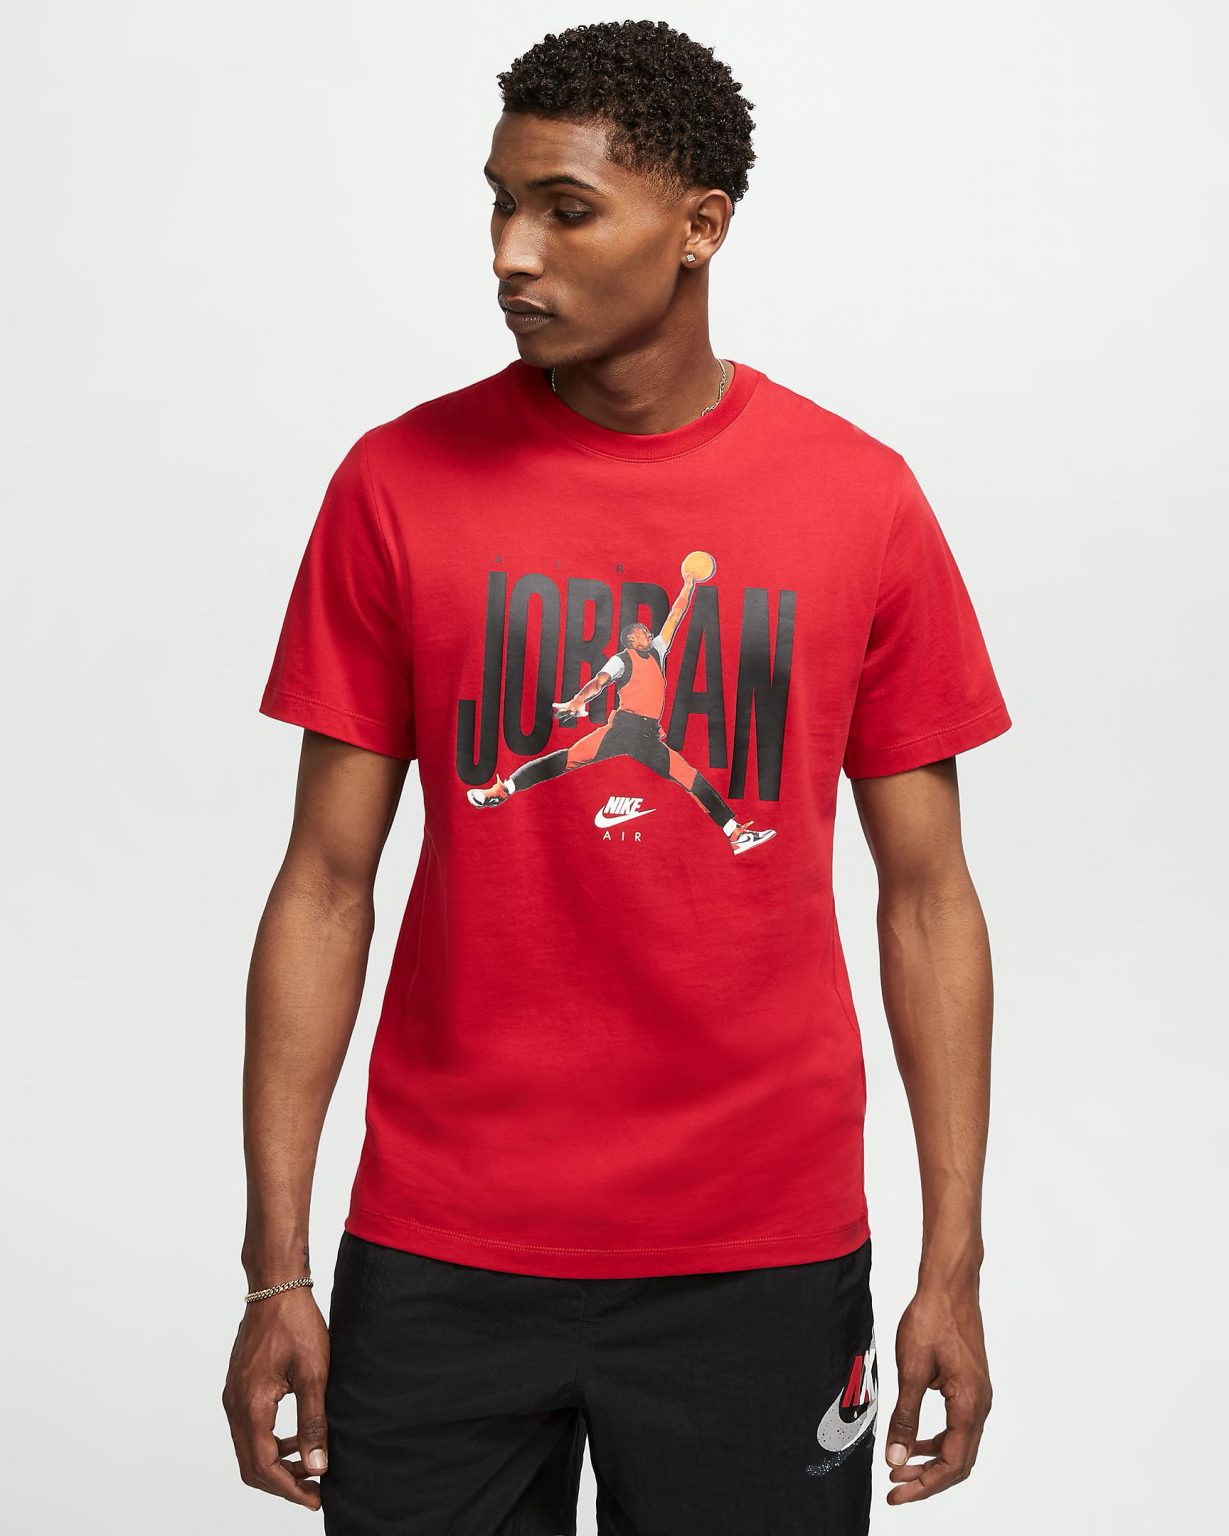 Air Jordan 1 Mid Chicago Black Toe Shirts | SneakerFits.com